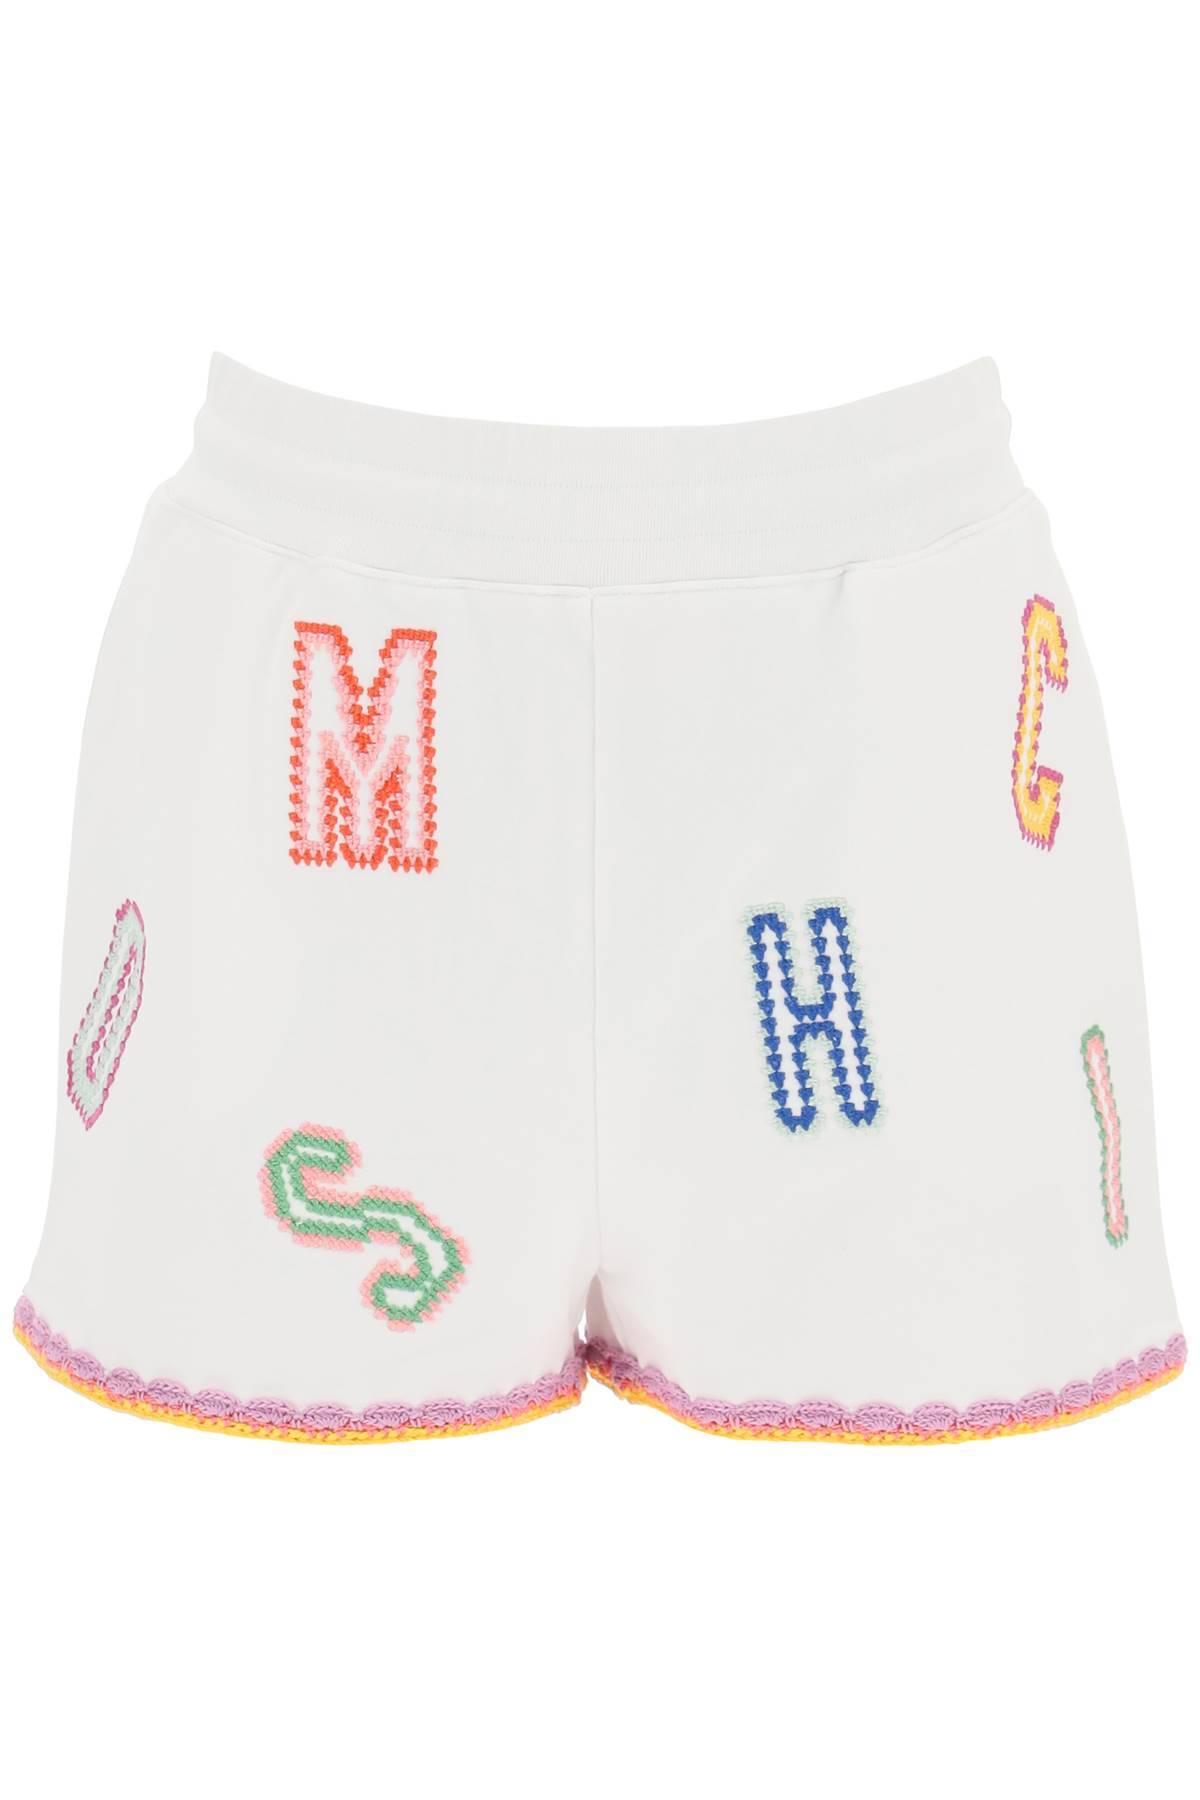 Moschino MOSCHINO embroidered cotton shorts